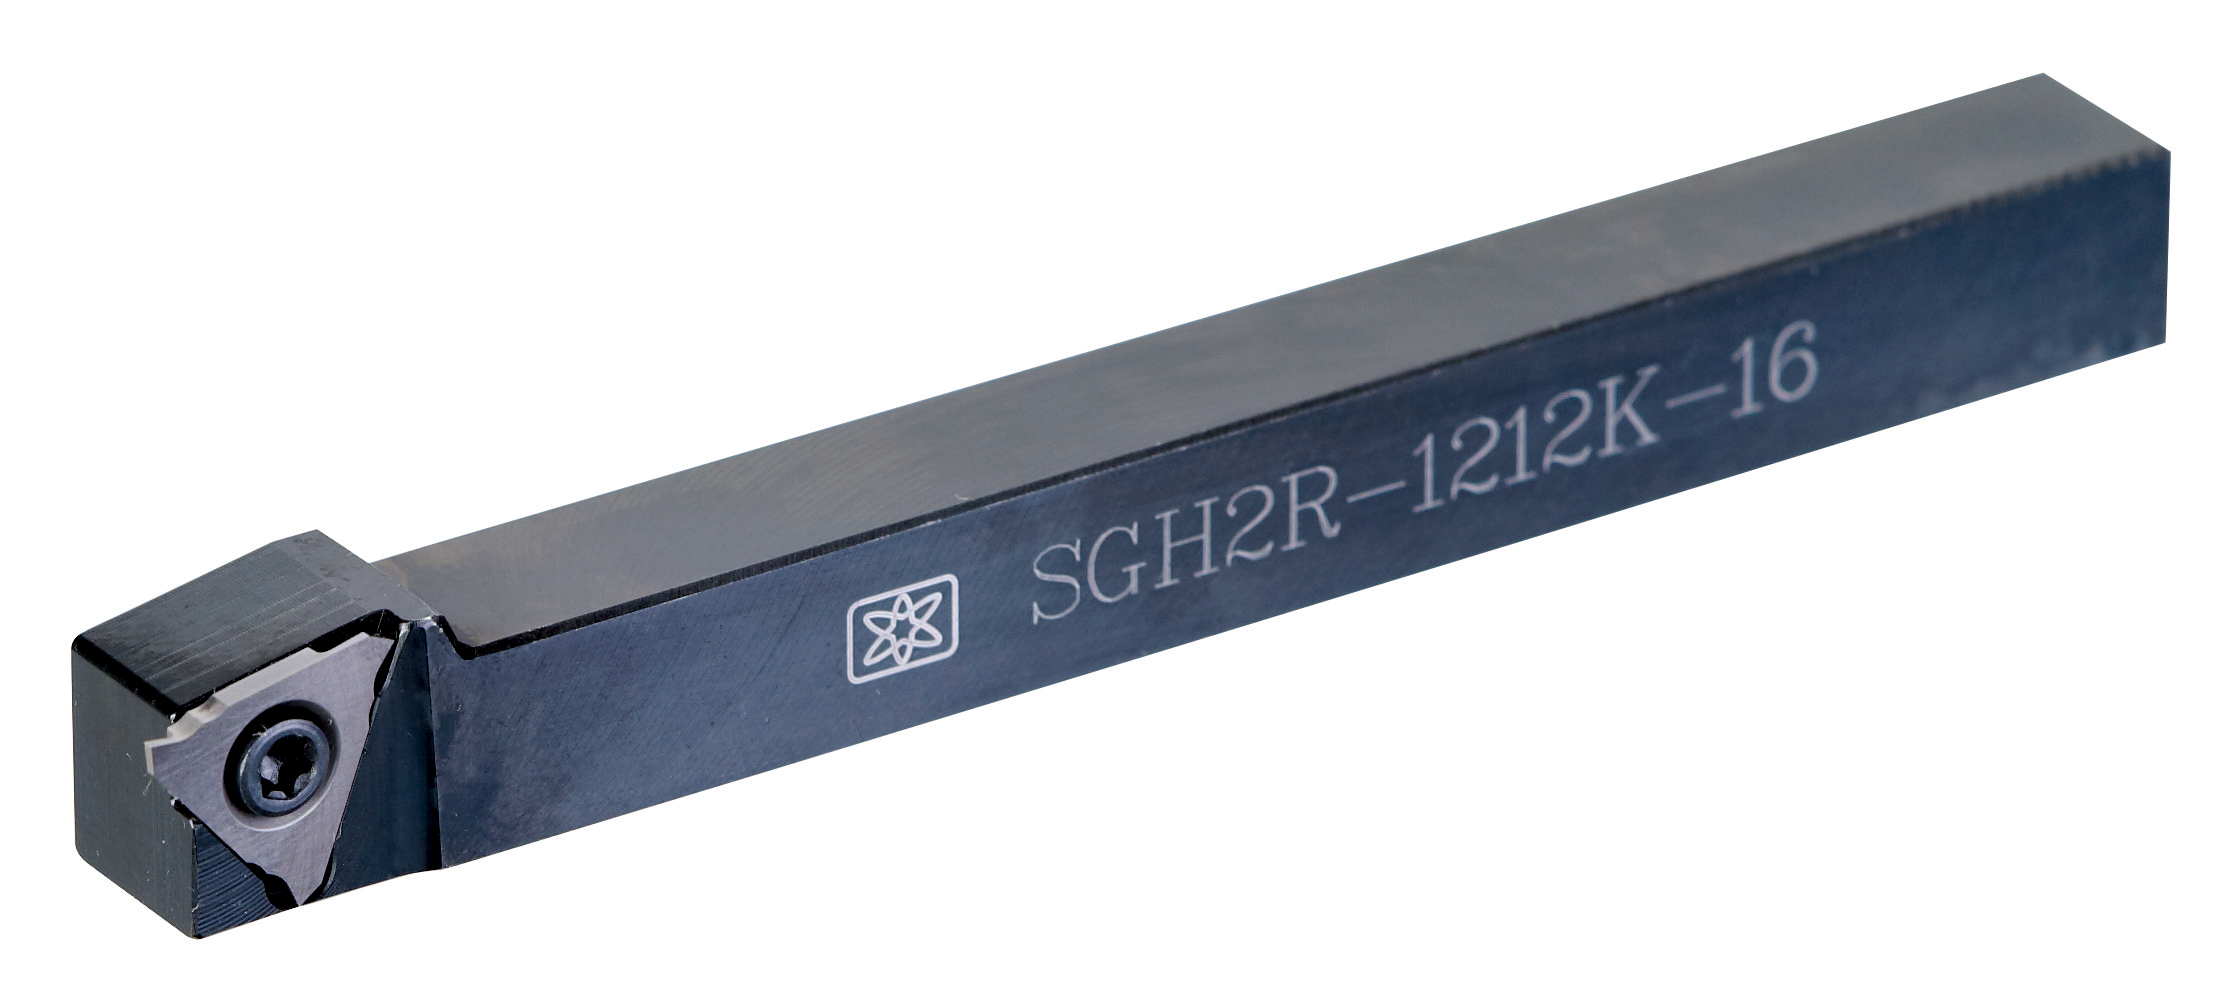 SGH2R (SMG/TTR16...) 外徑切槽刀